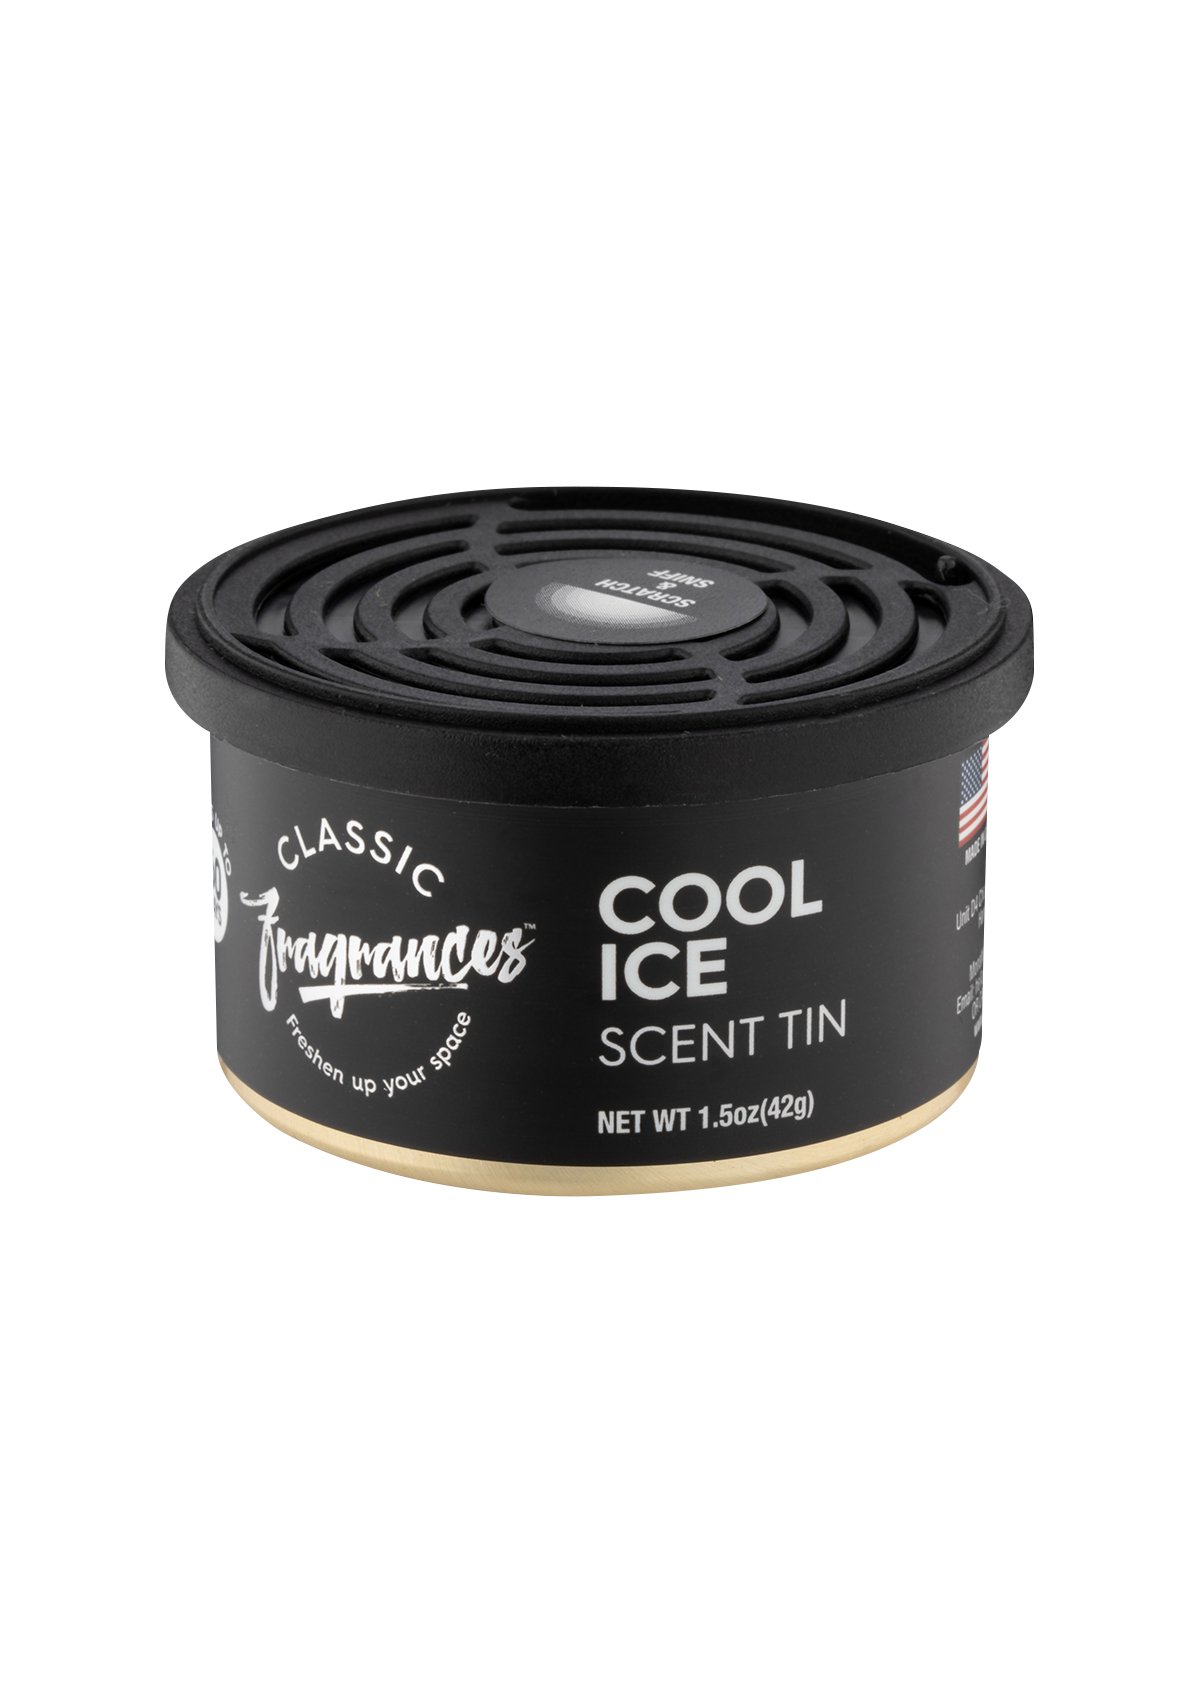 Cool Ice Scent Tin